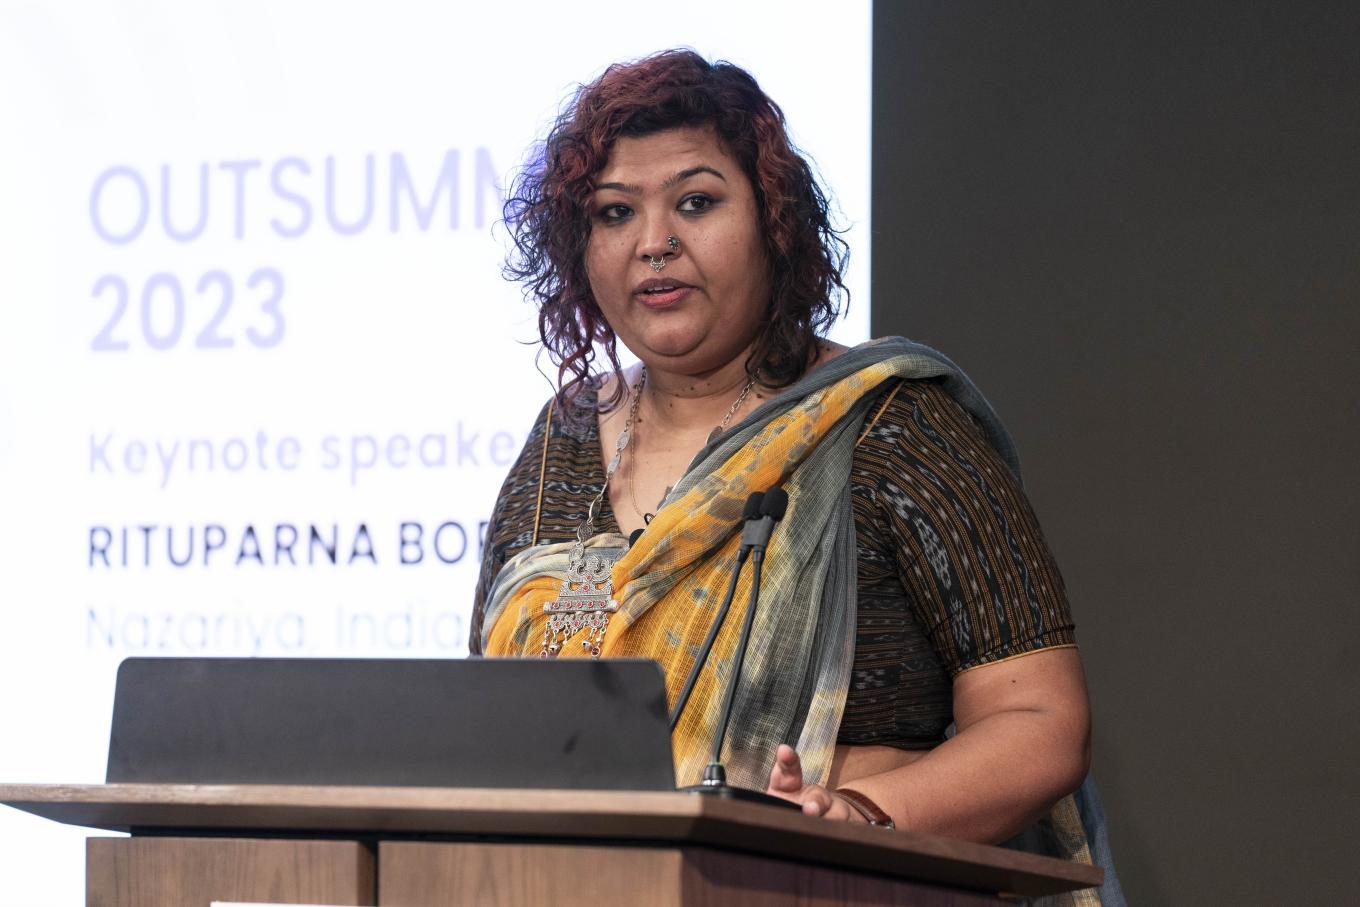 Rituparna Borah speaking at the podium